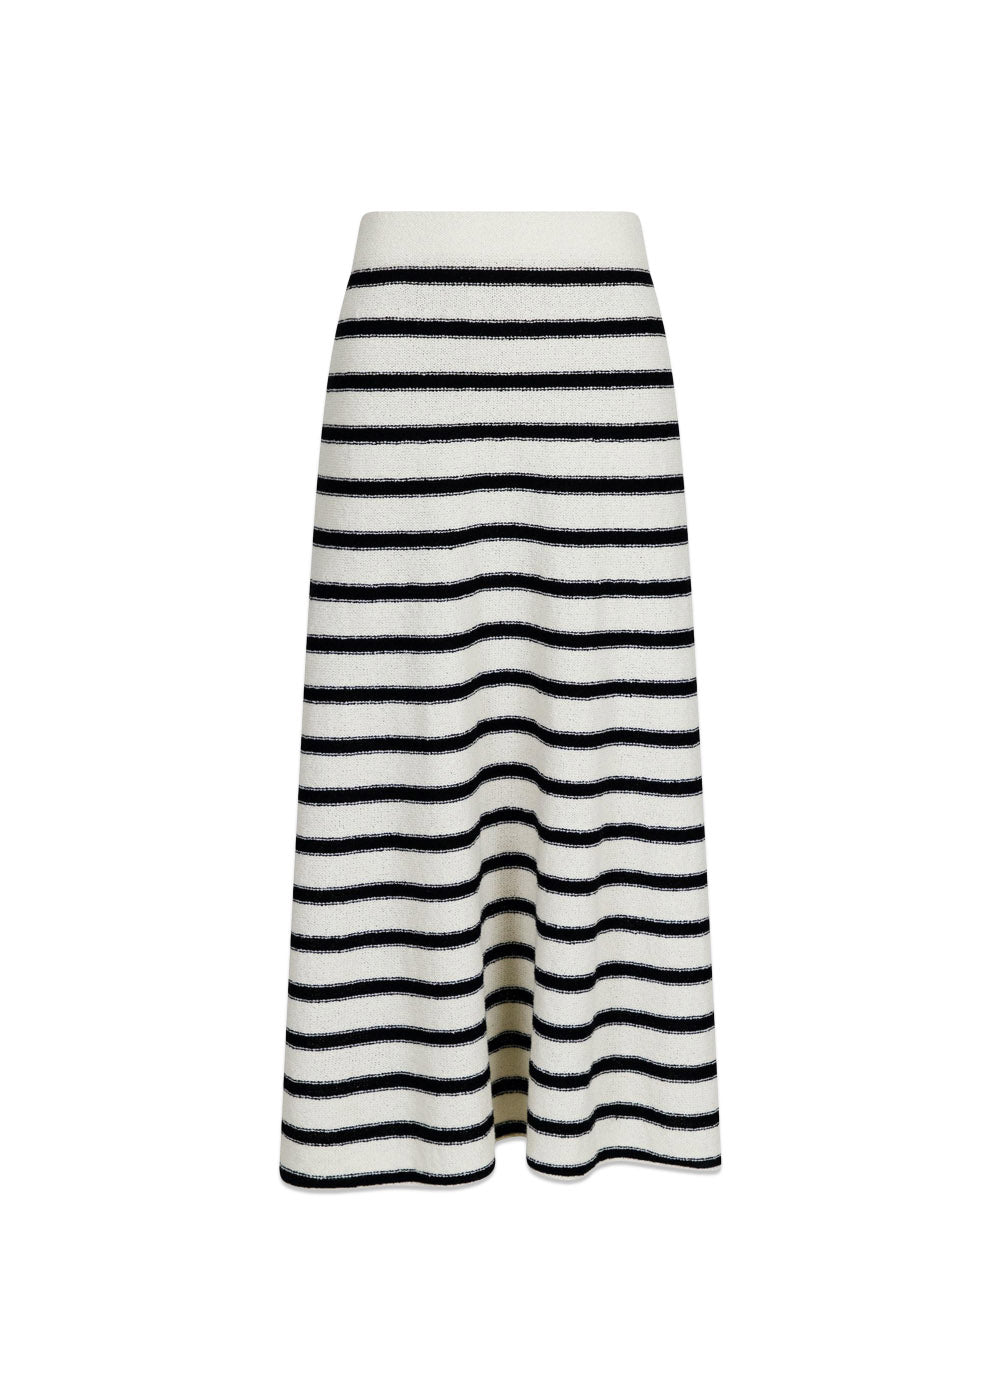 Neo Noirs Etti Boucle Knit Stripe Skirt - Black Striped. Køb strik her.